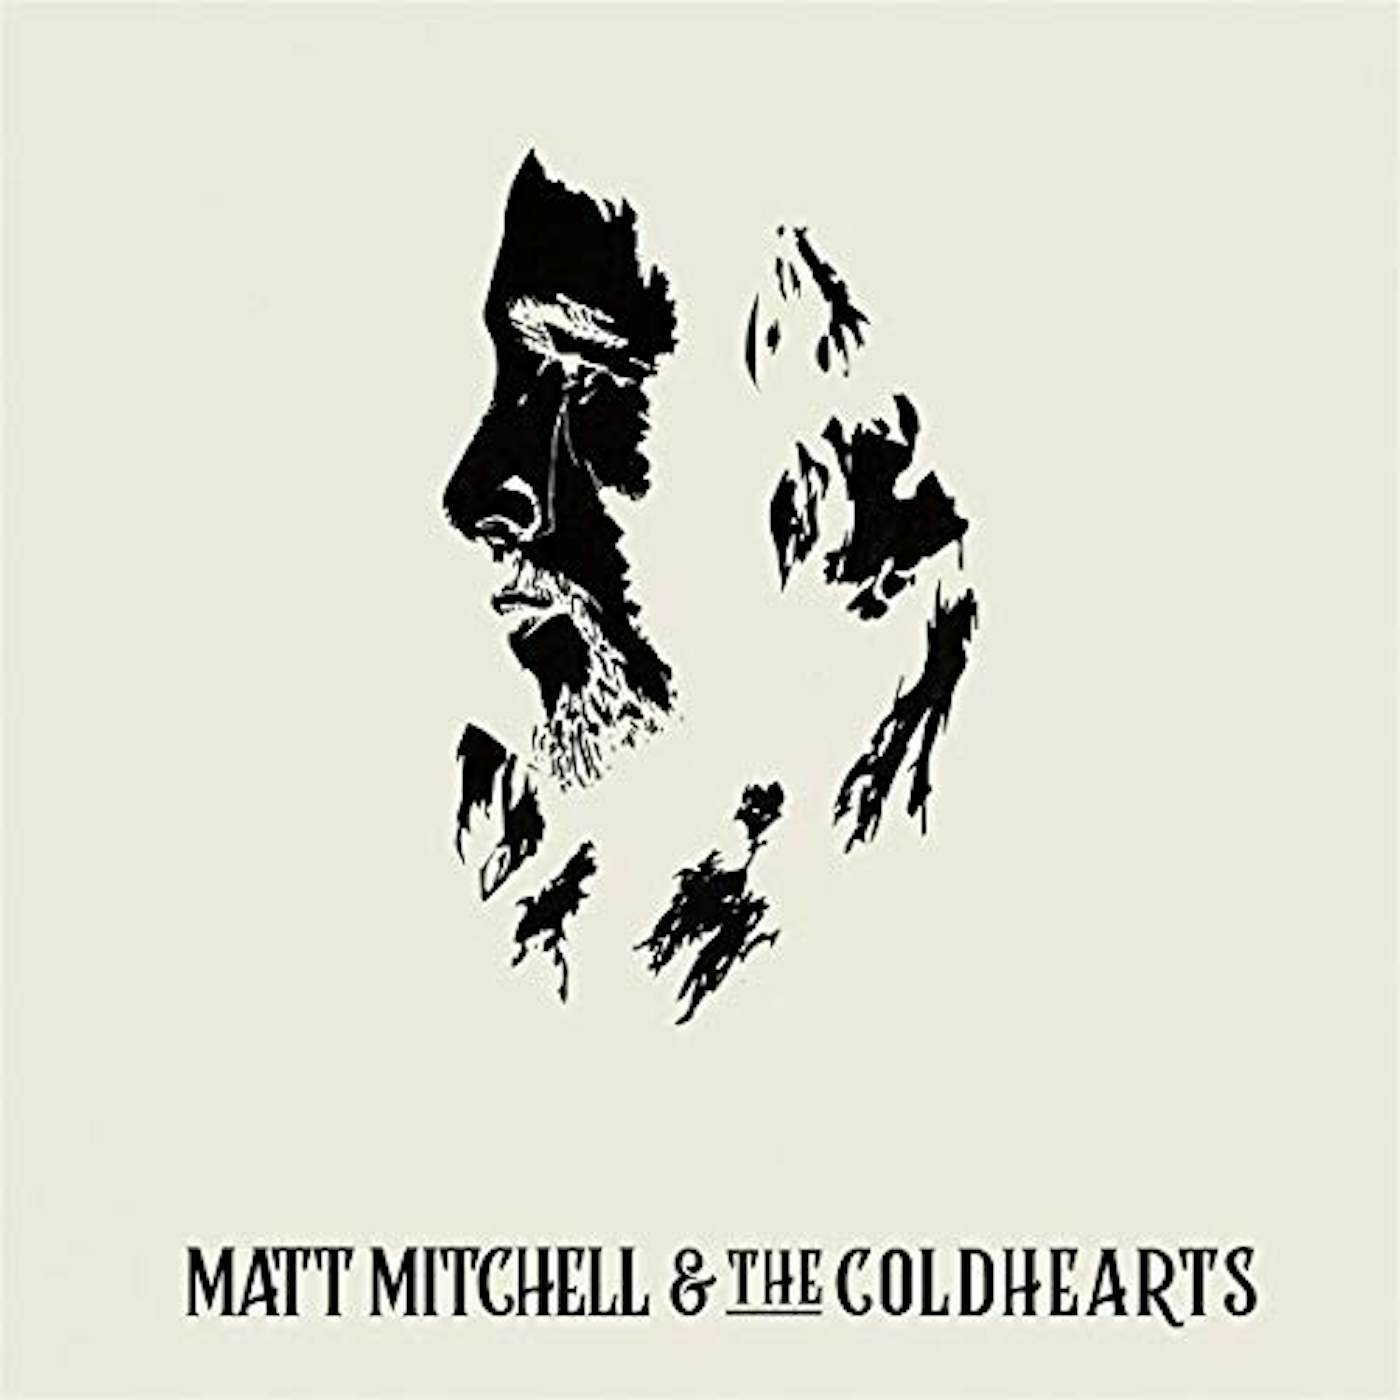 MATT MITCHELL & THE COLDHEARTS CD